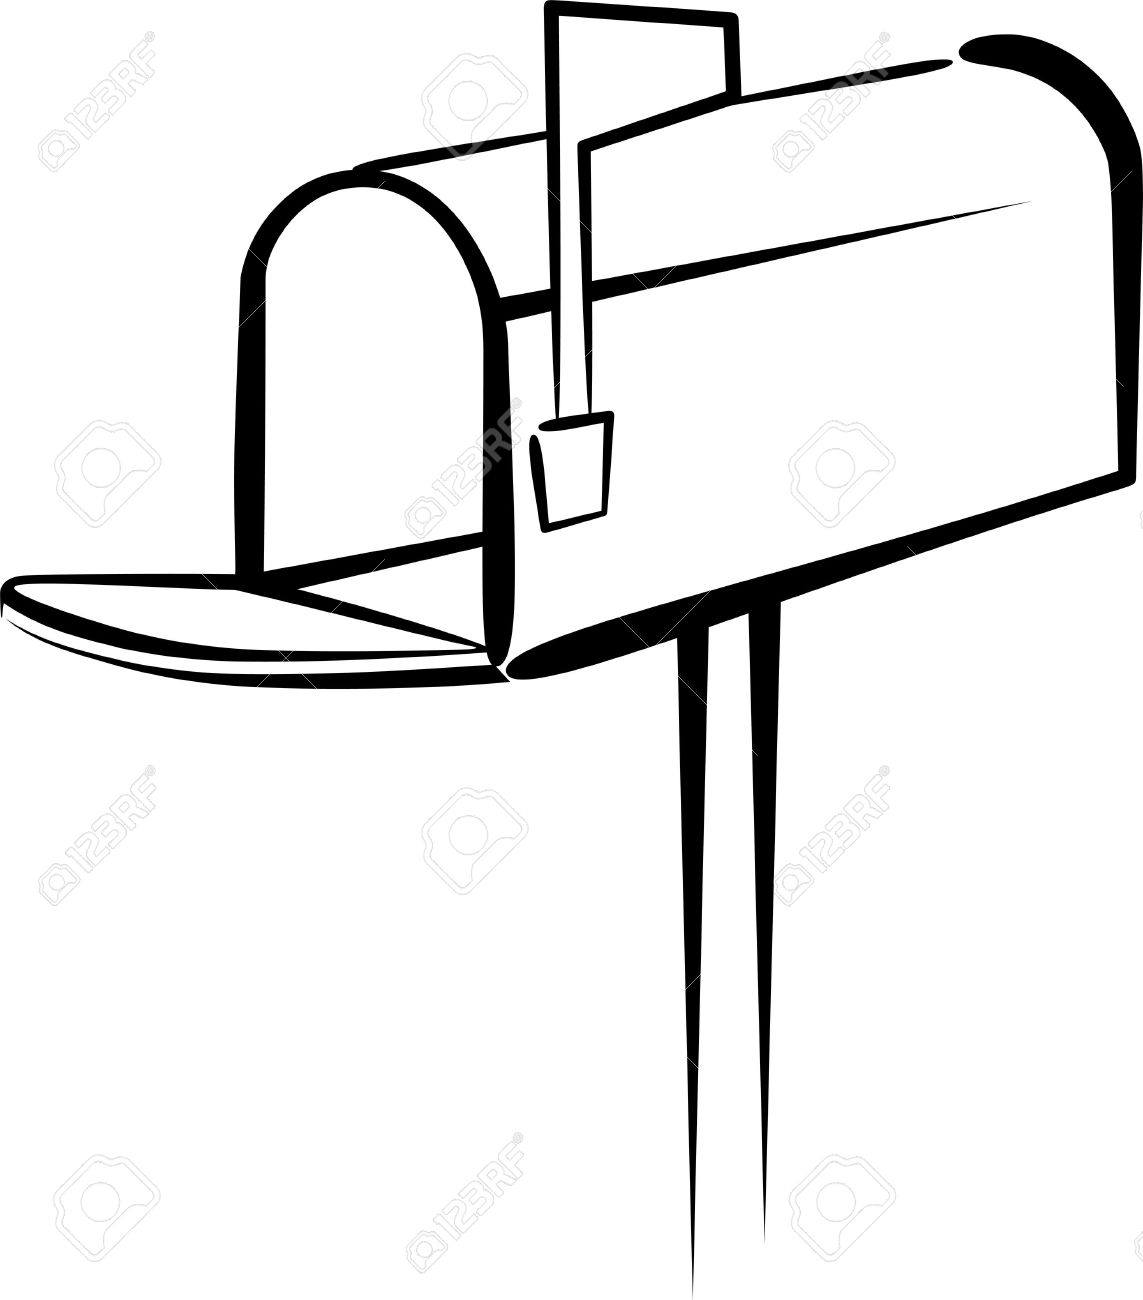 mailbox clipart simple